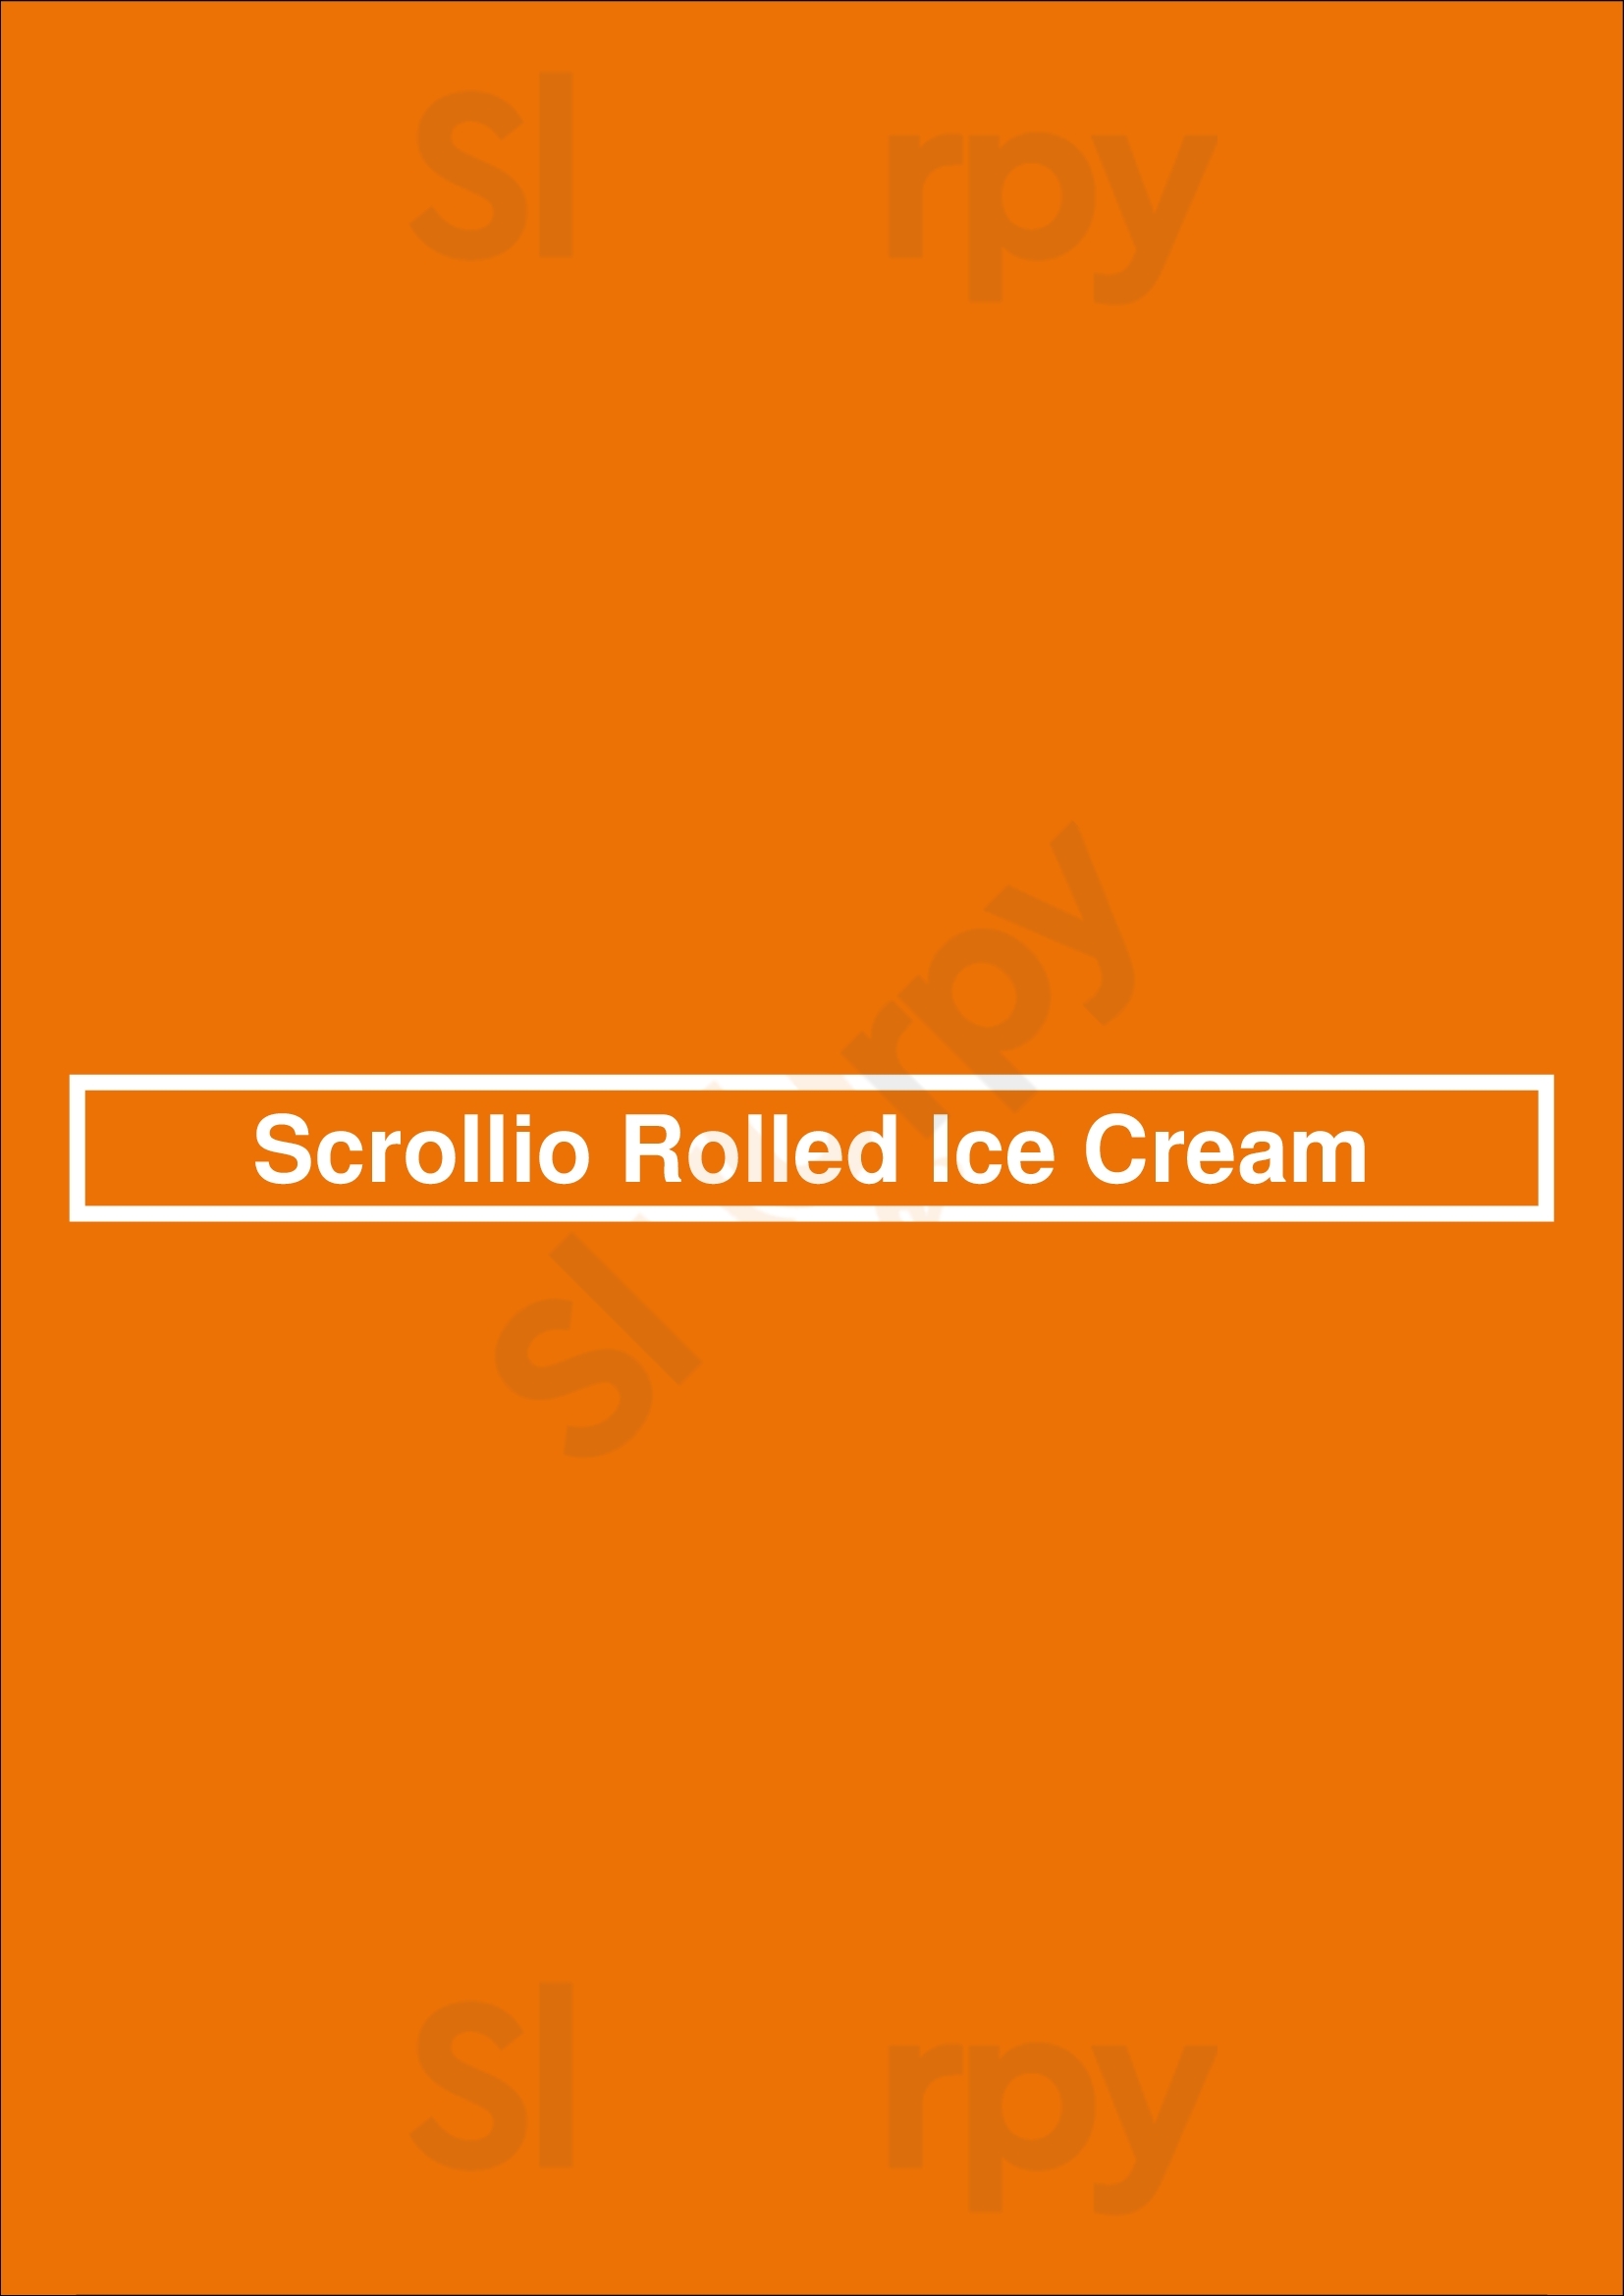 Scrollio Rolled Ice Cream Calgary Menu - 1